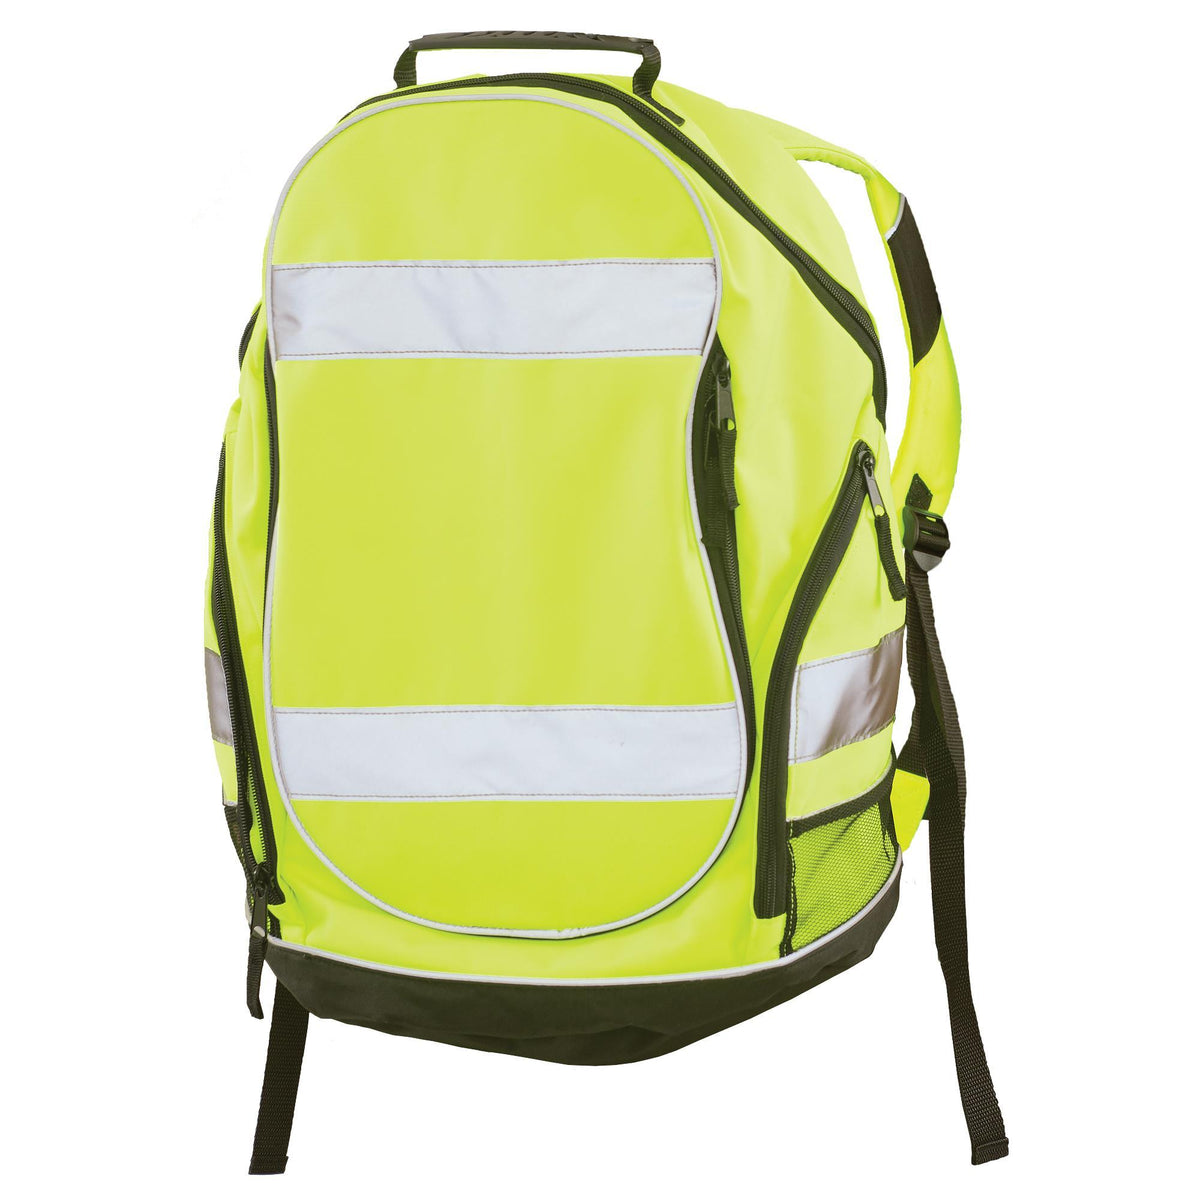 BP1 Hi-Viz Lime Backpack 1pc